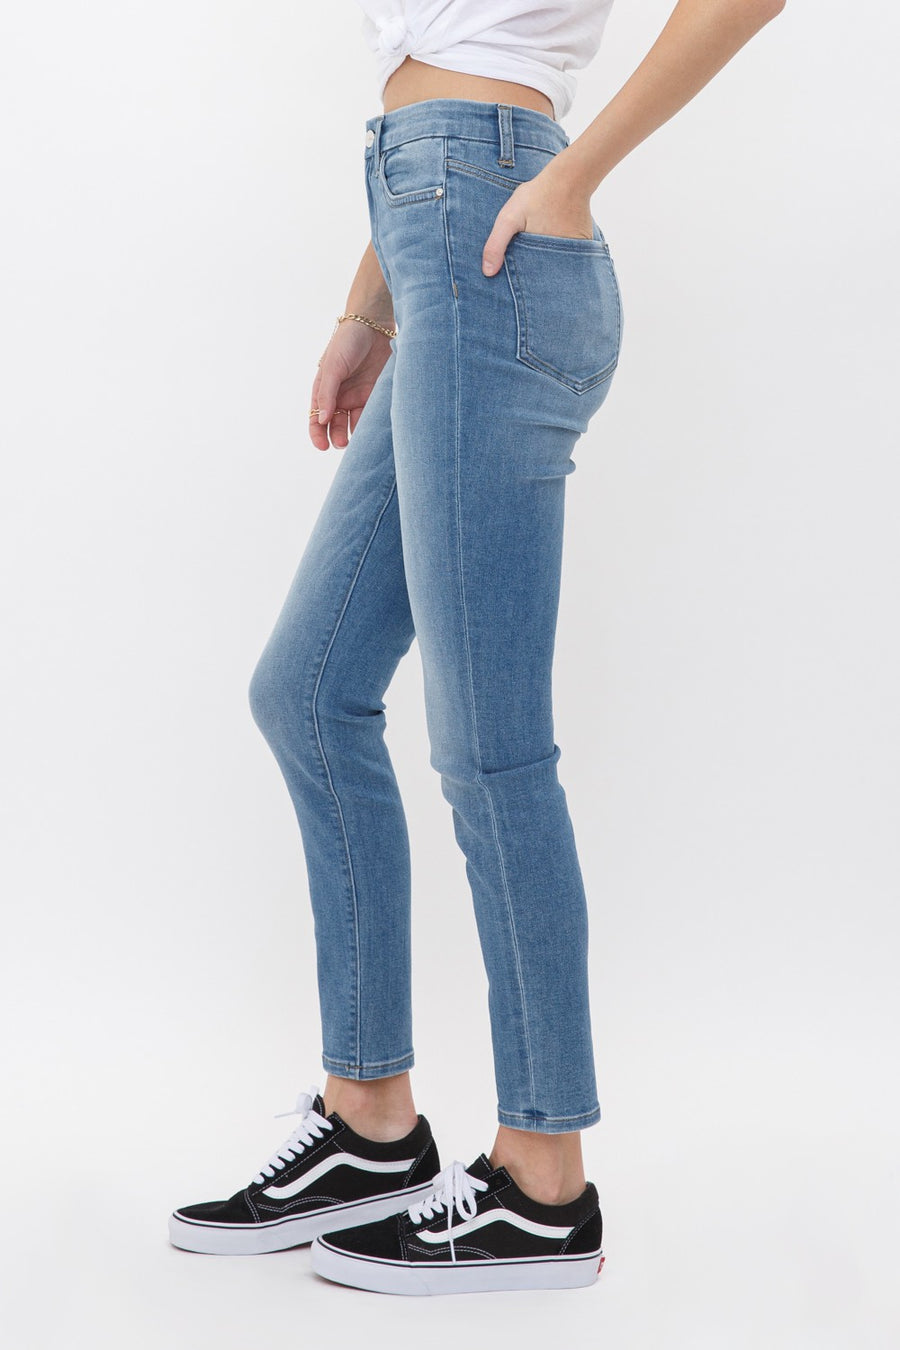 MDP-S130 Mica Denim High Rish Ankle Skinny Jeans